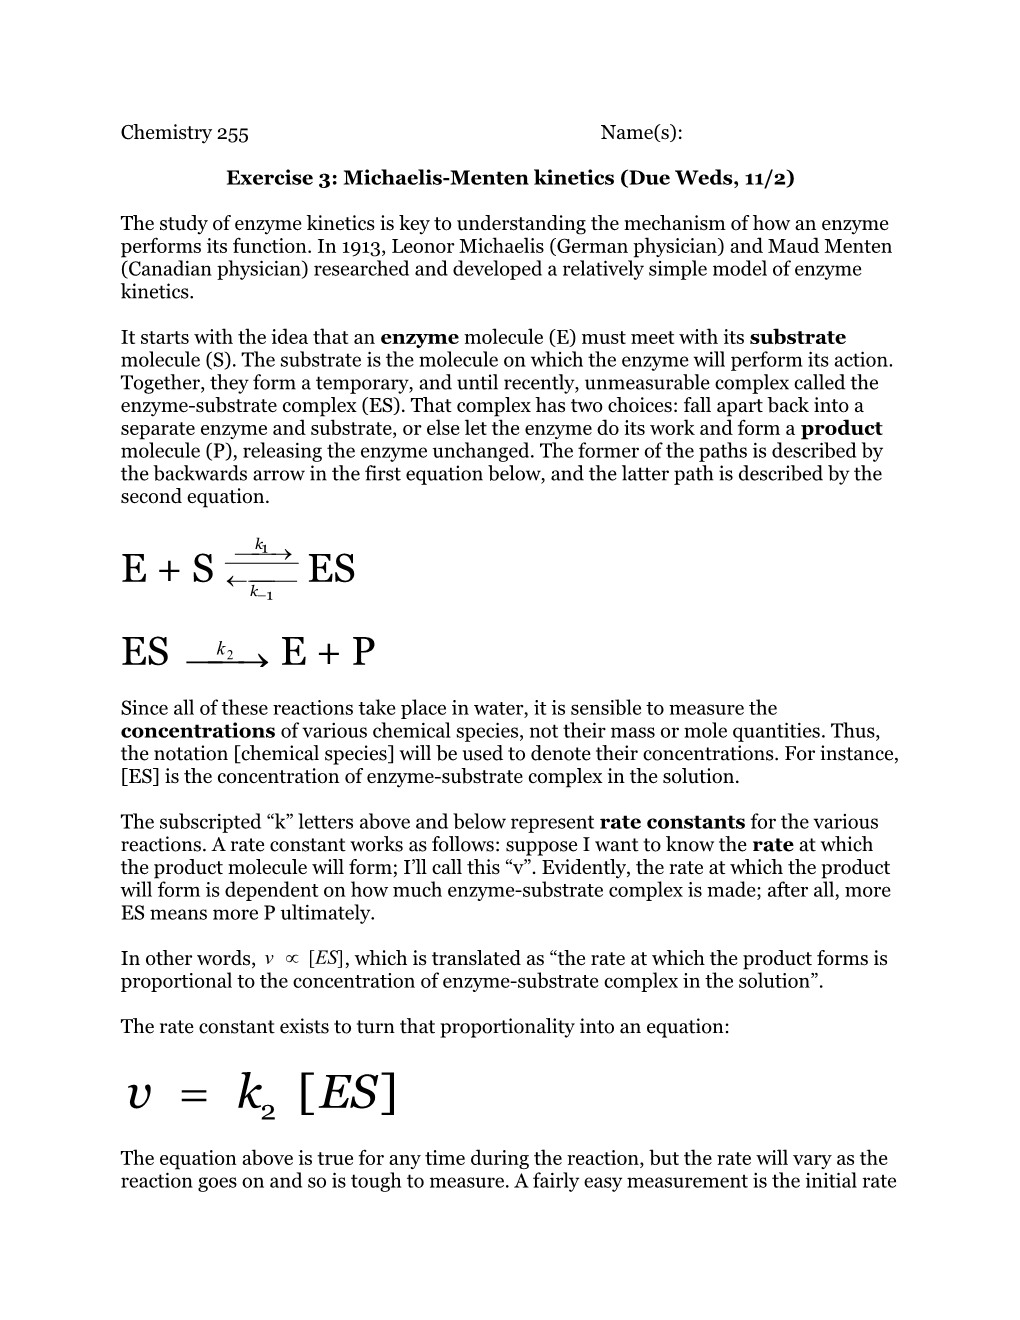 Exercise 3: Michaelis-Menten Kinetics (Due Weds, 11/2)